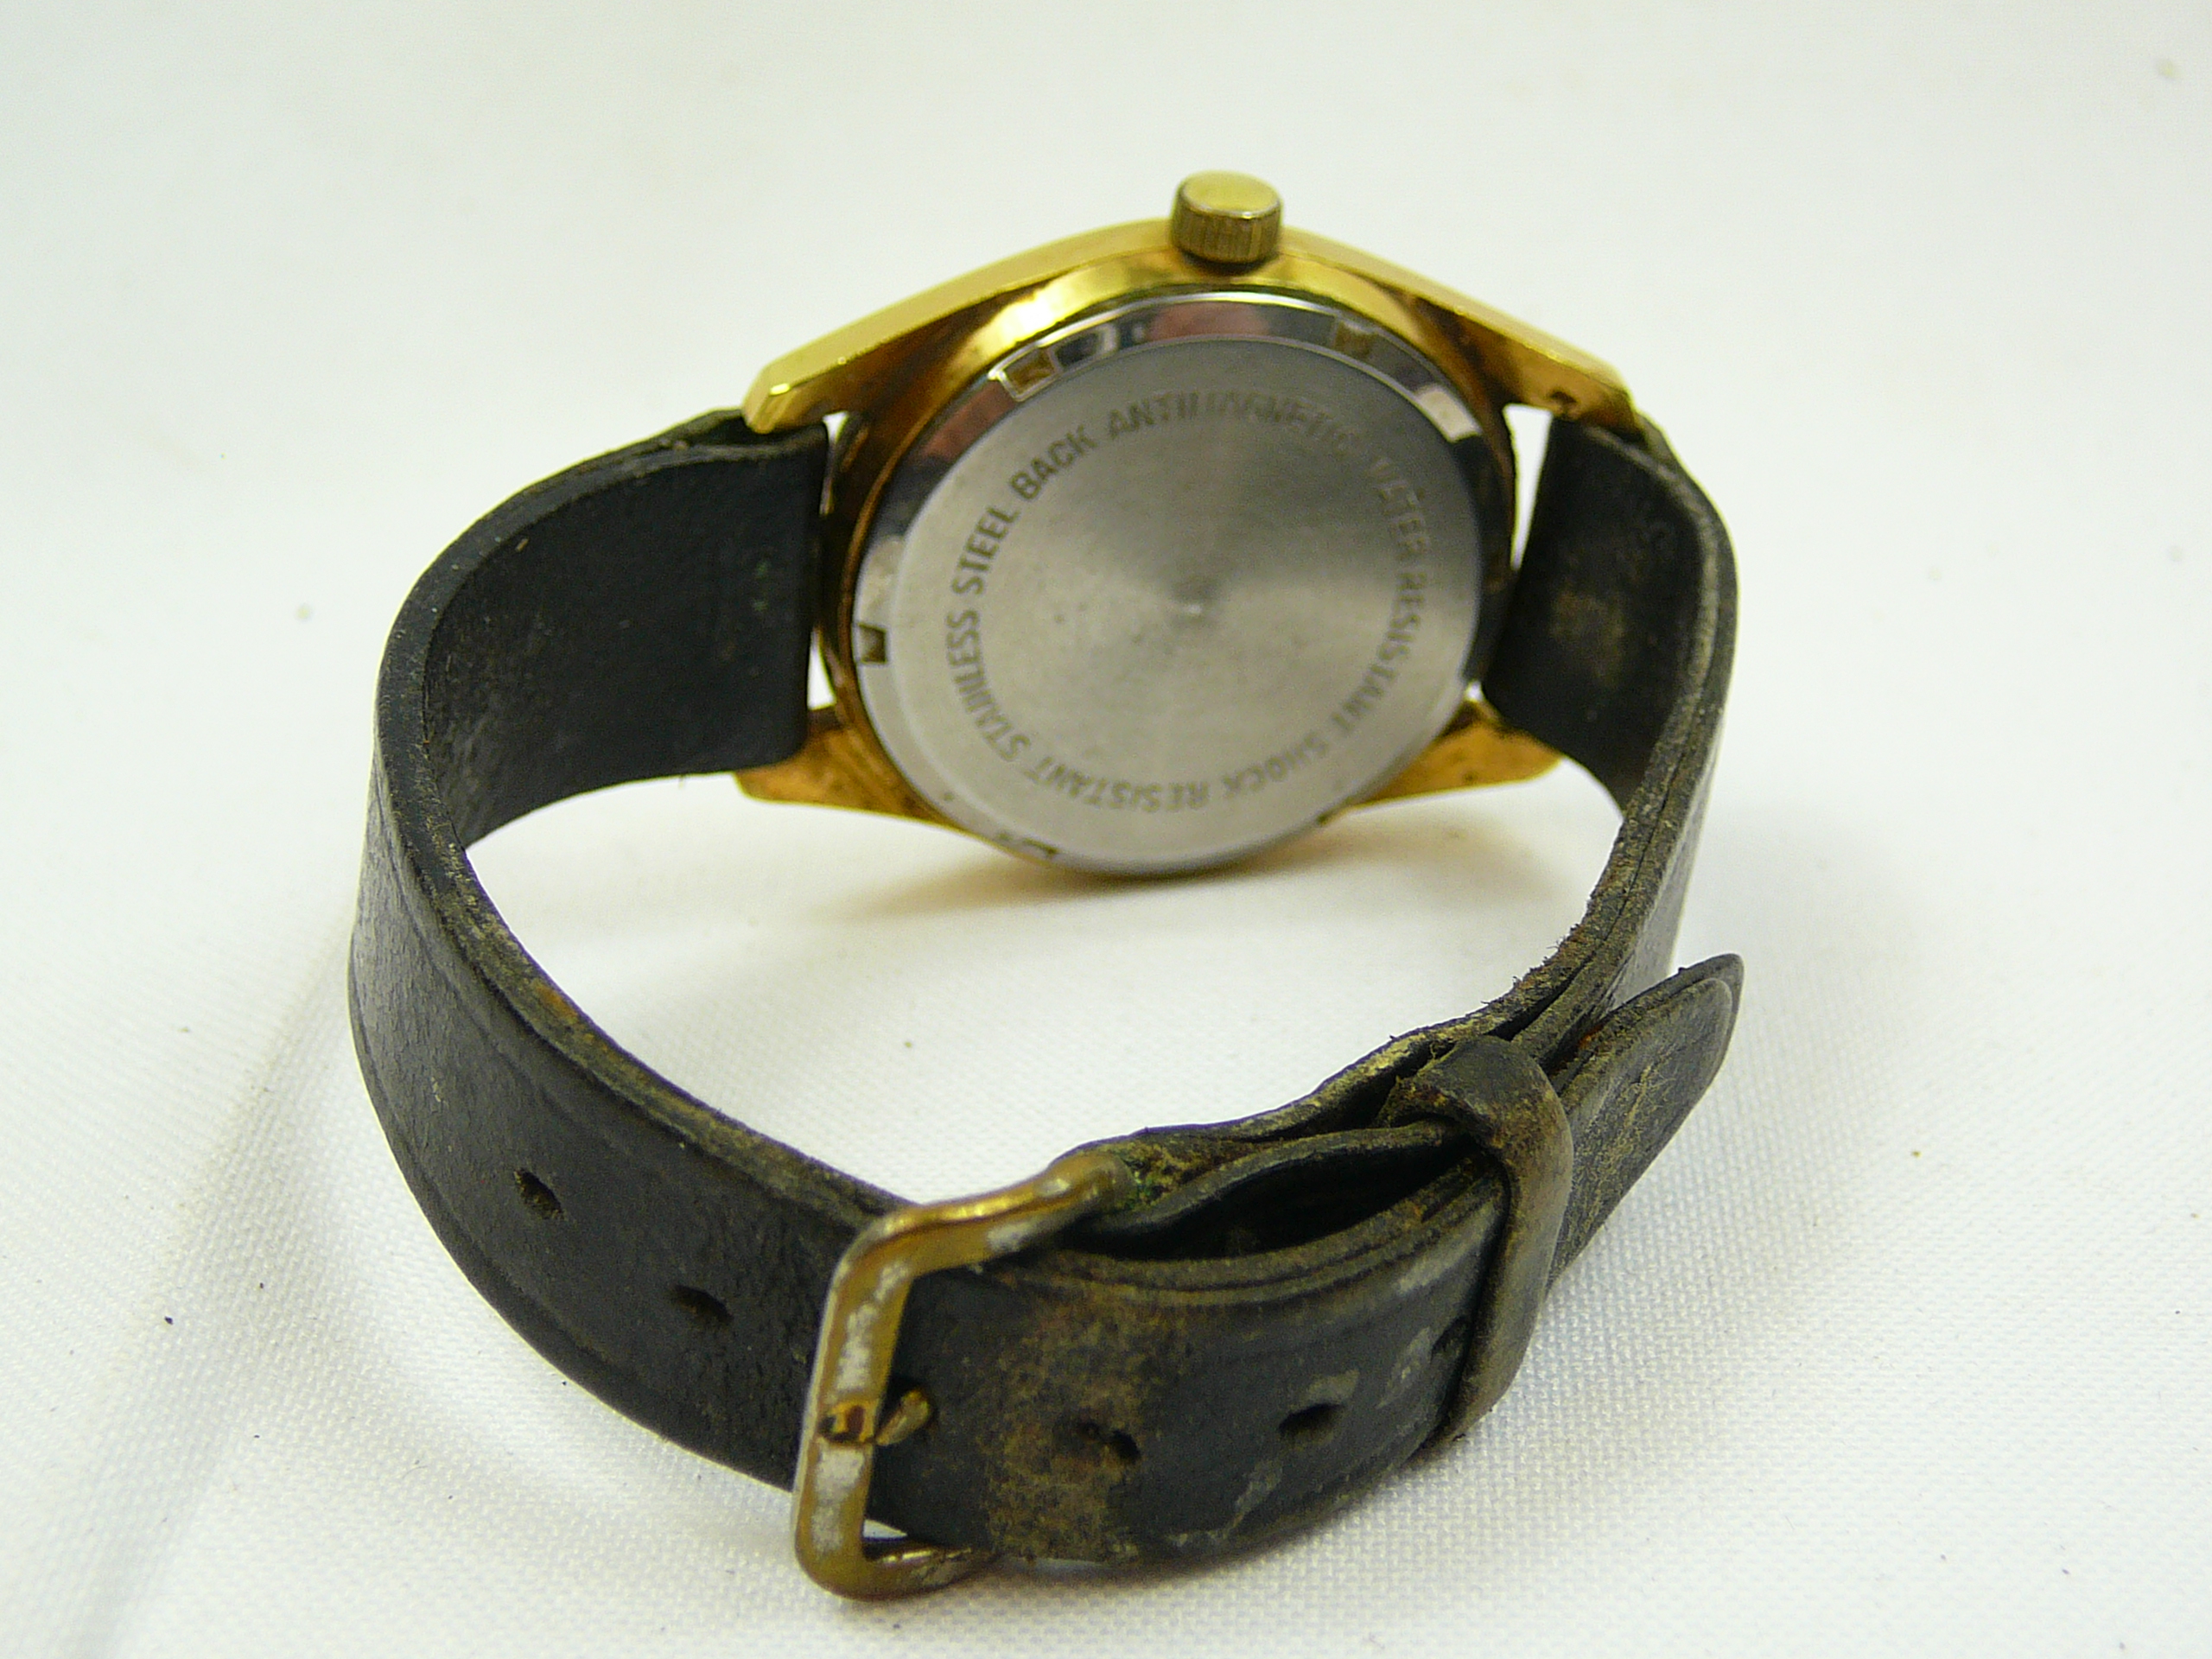 Gents vintage Ingersoll wristwatch - Image 2 of 3